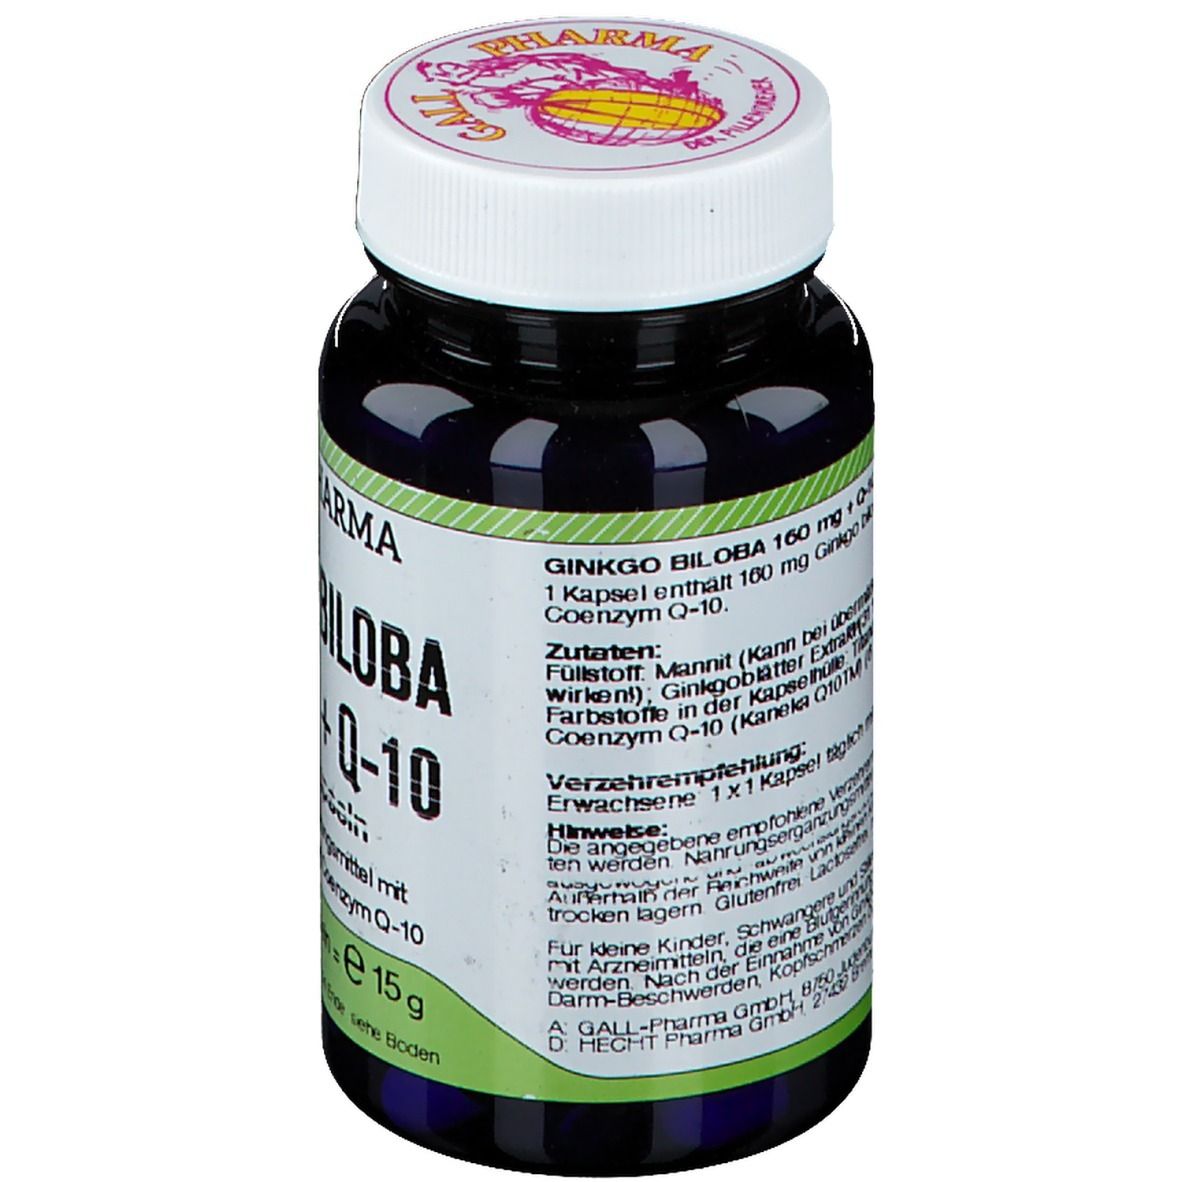 GALL PHARMA Ginkgo Biloba 160 mg + Q-10 GPH